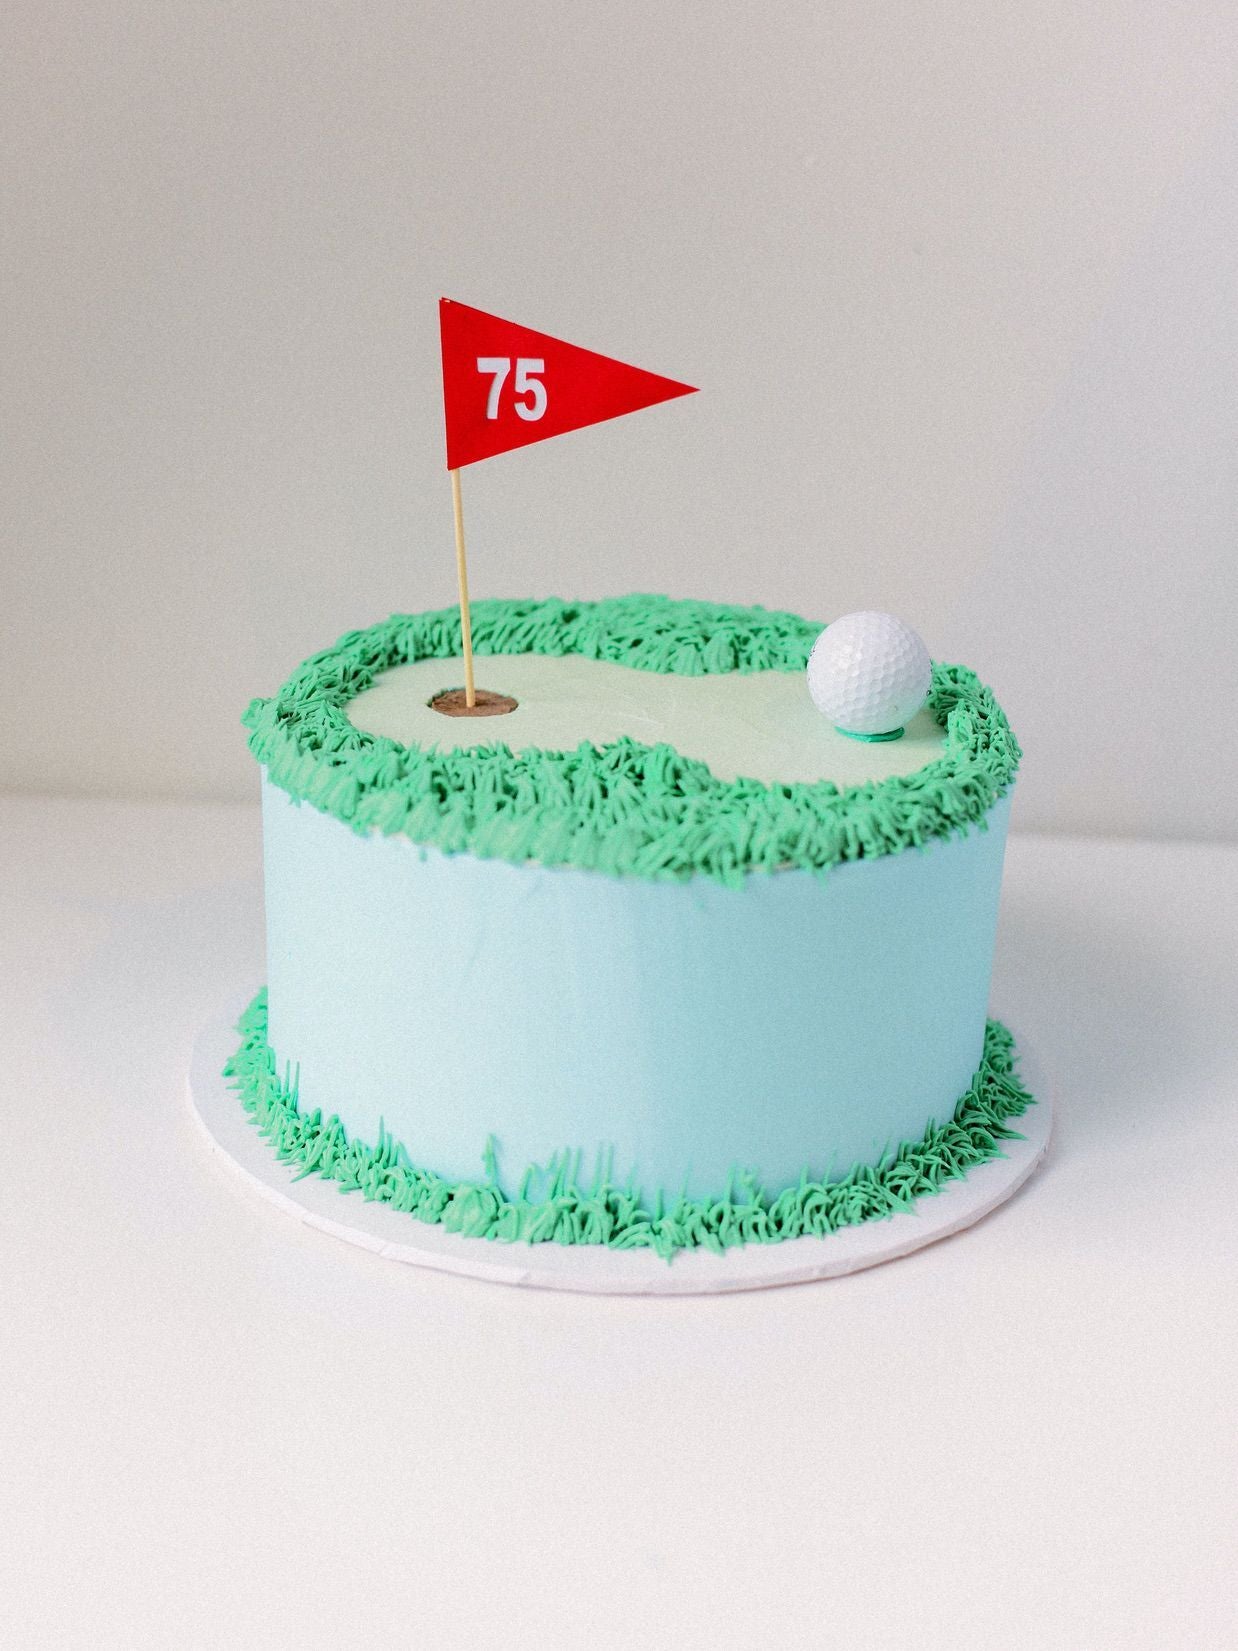 How To Make A Golf Course Birthday Cake - Erin Brighton